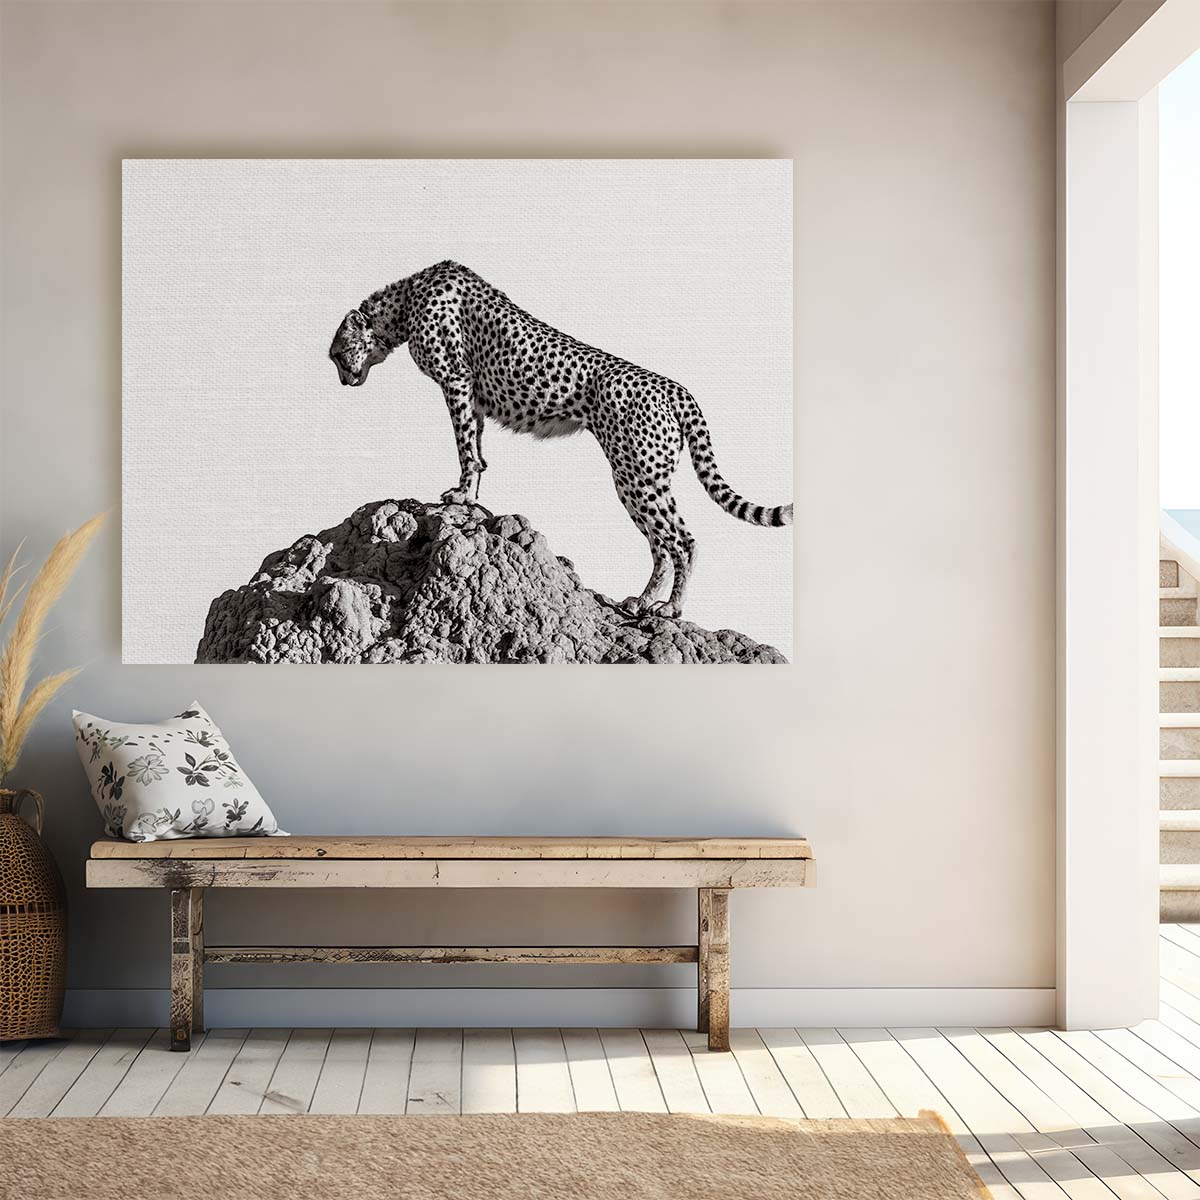 Monochrome Leopard Profile - Masai Mara Wildlife Photography Wall Art